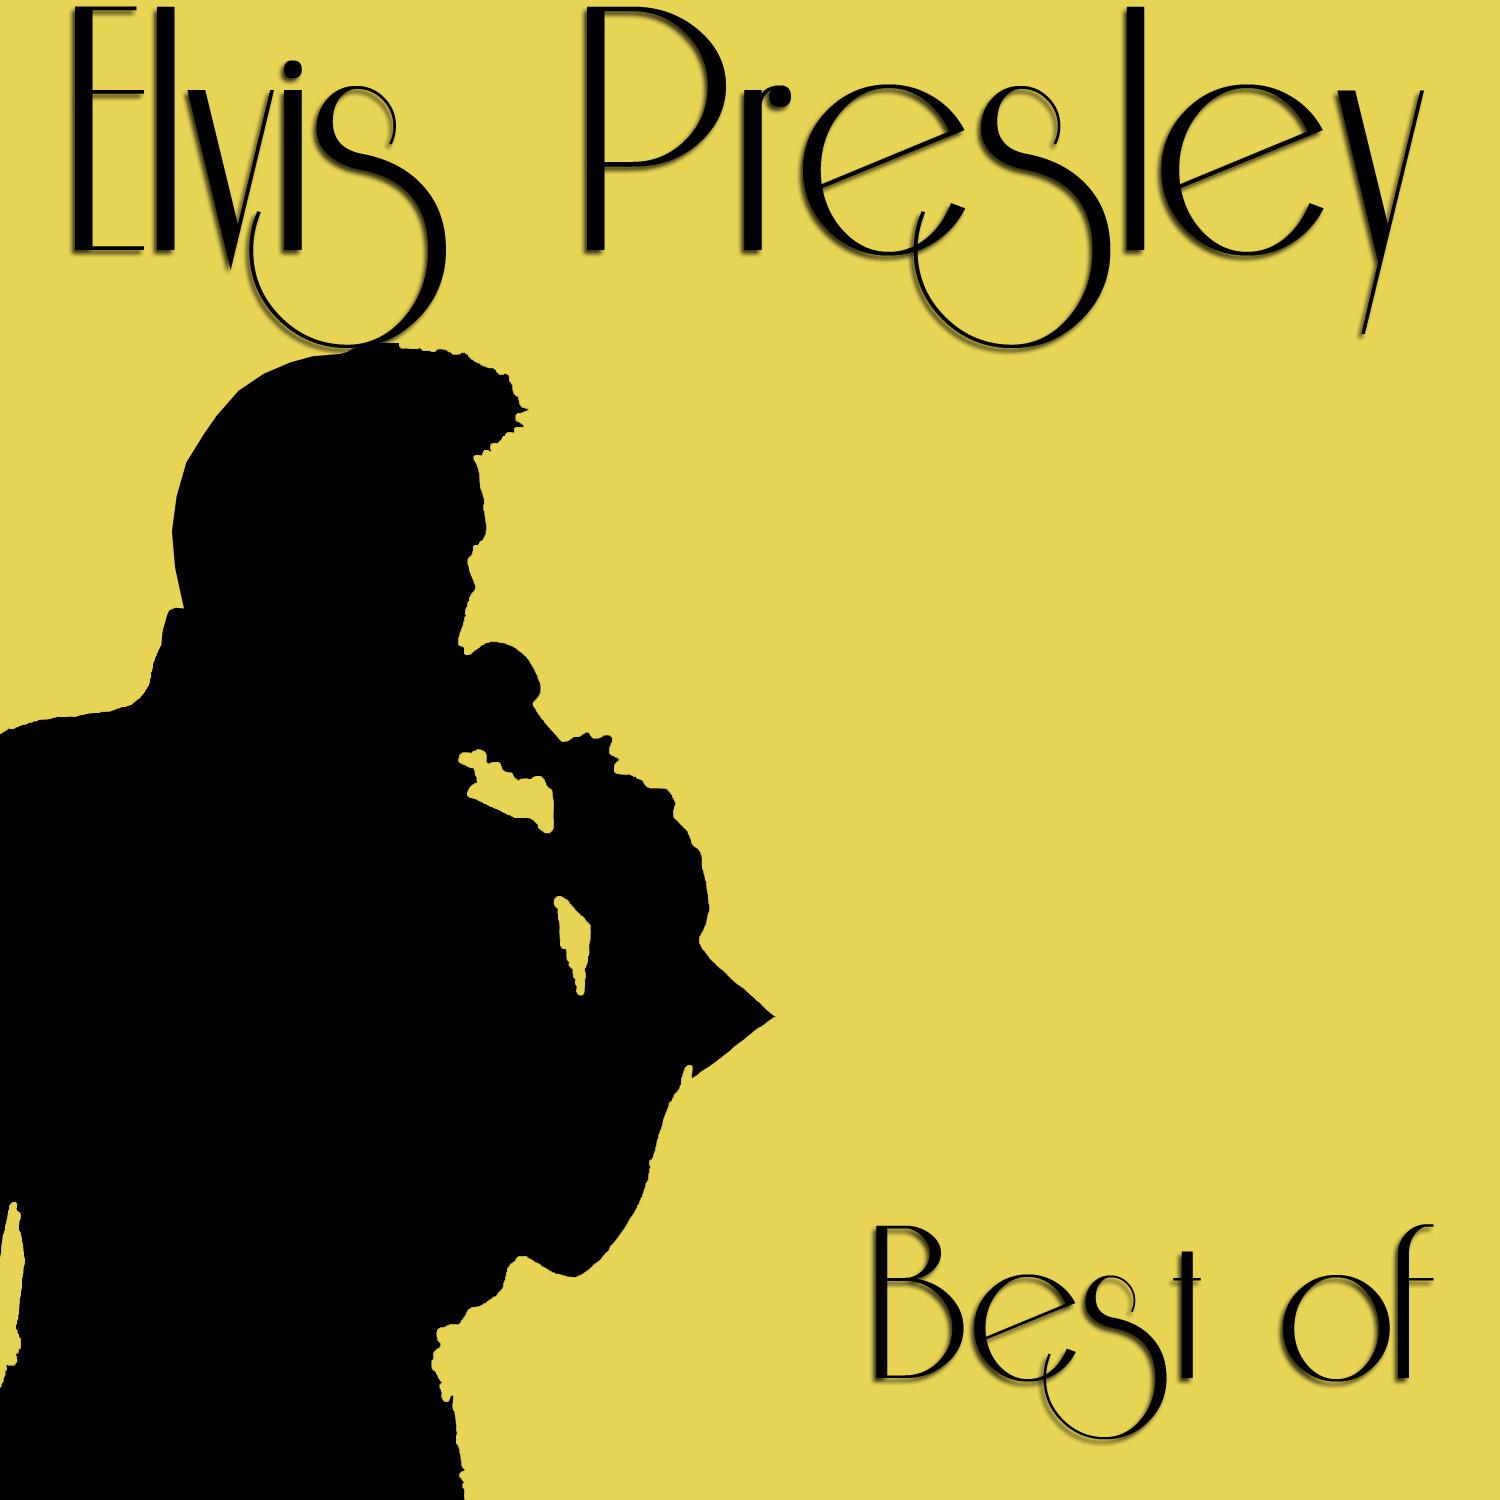 The Best Of Elvis